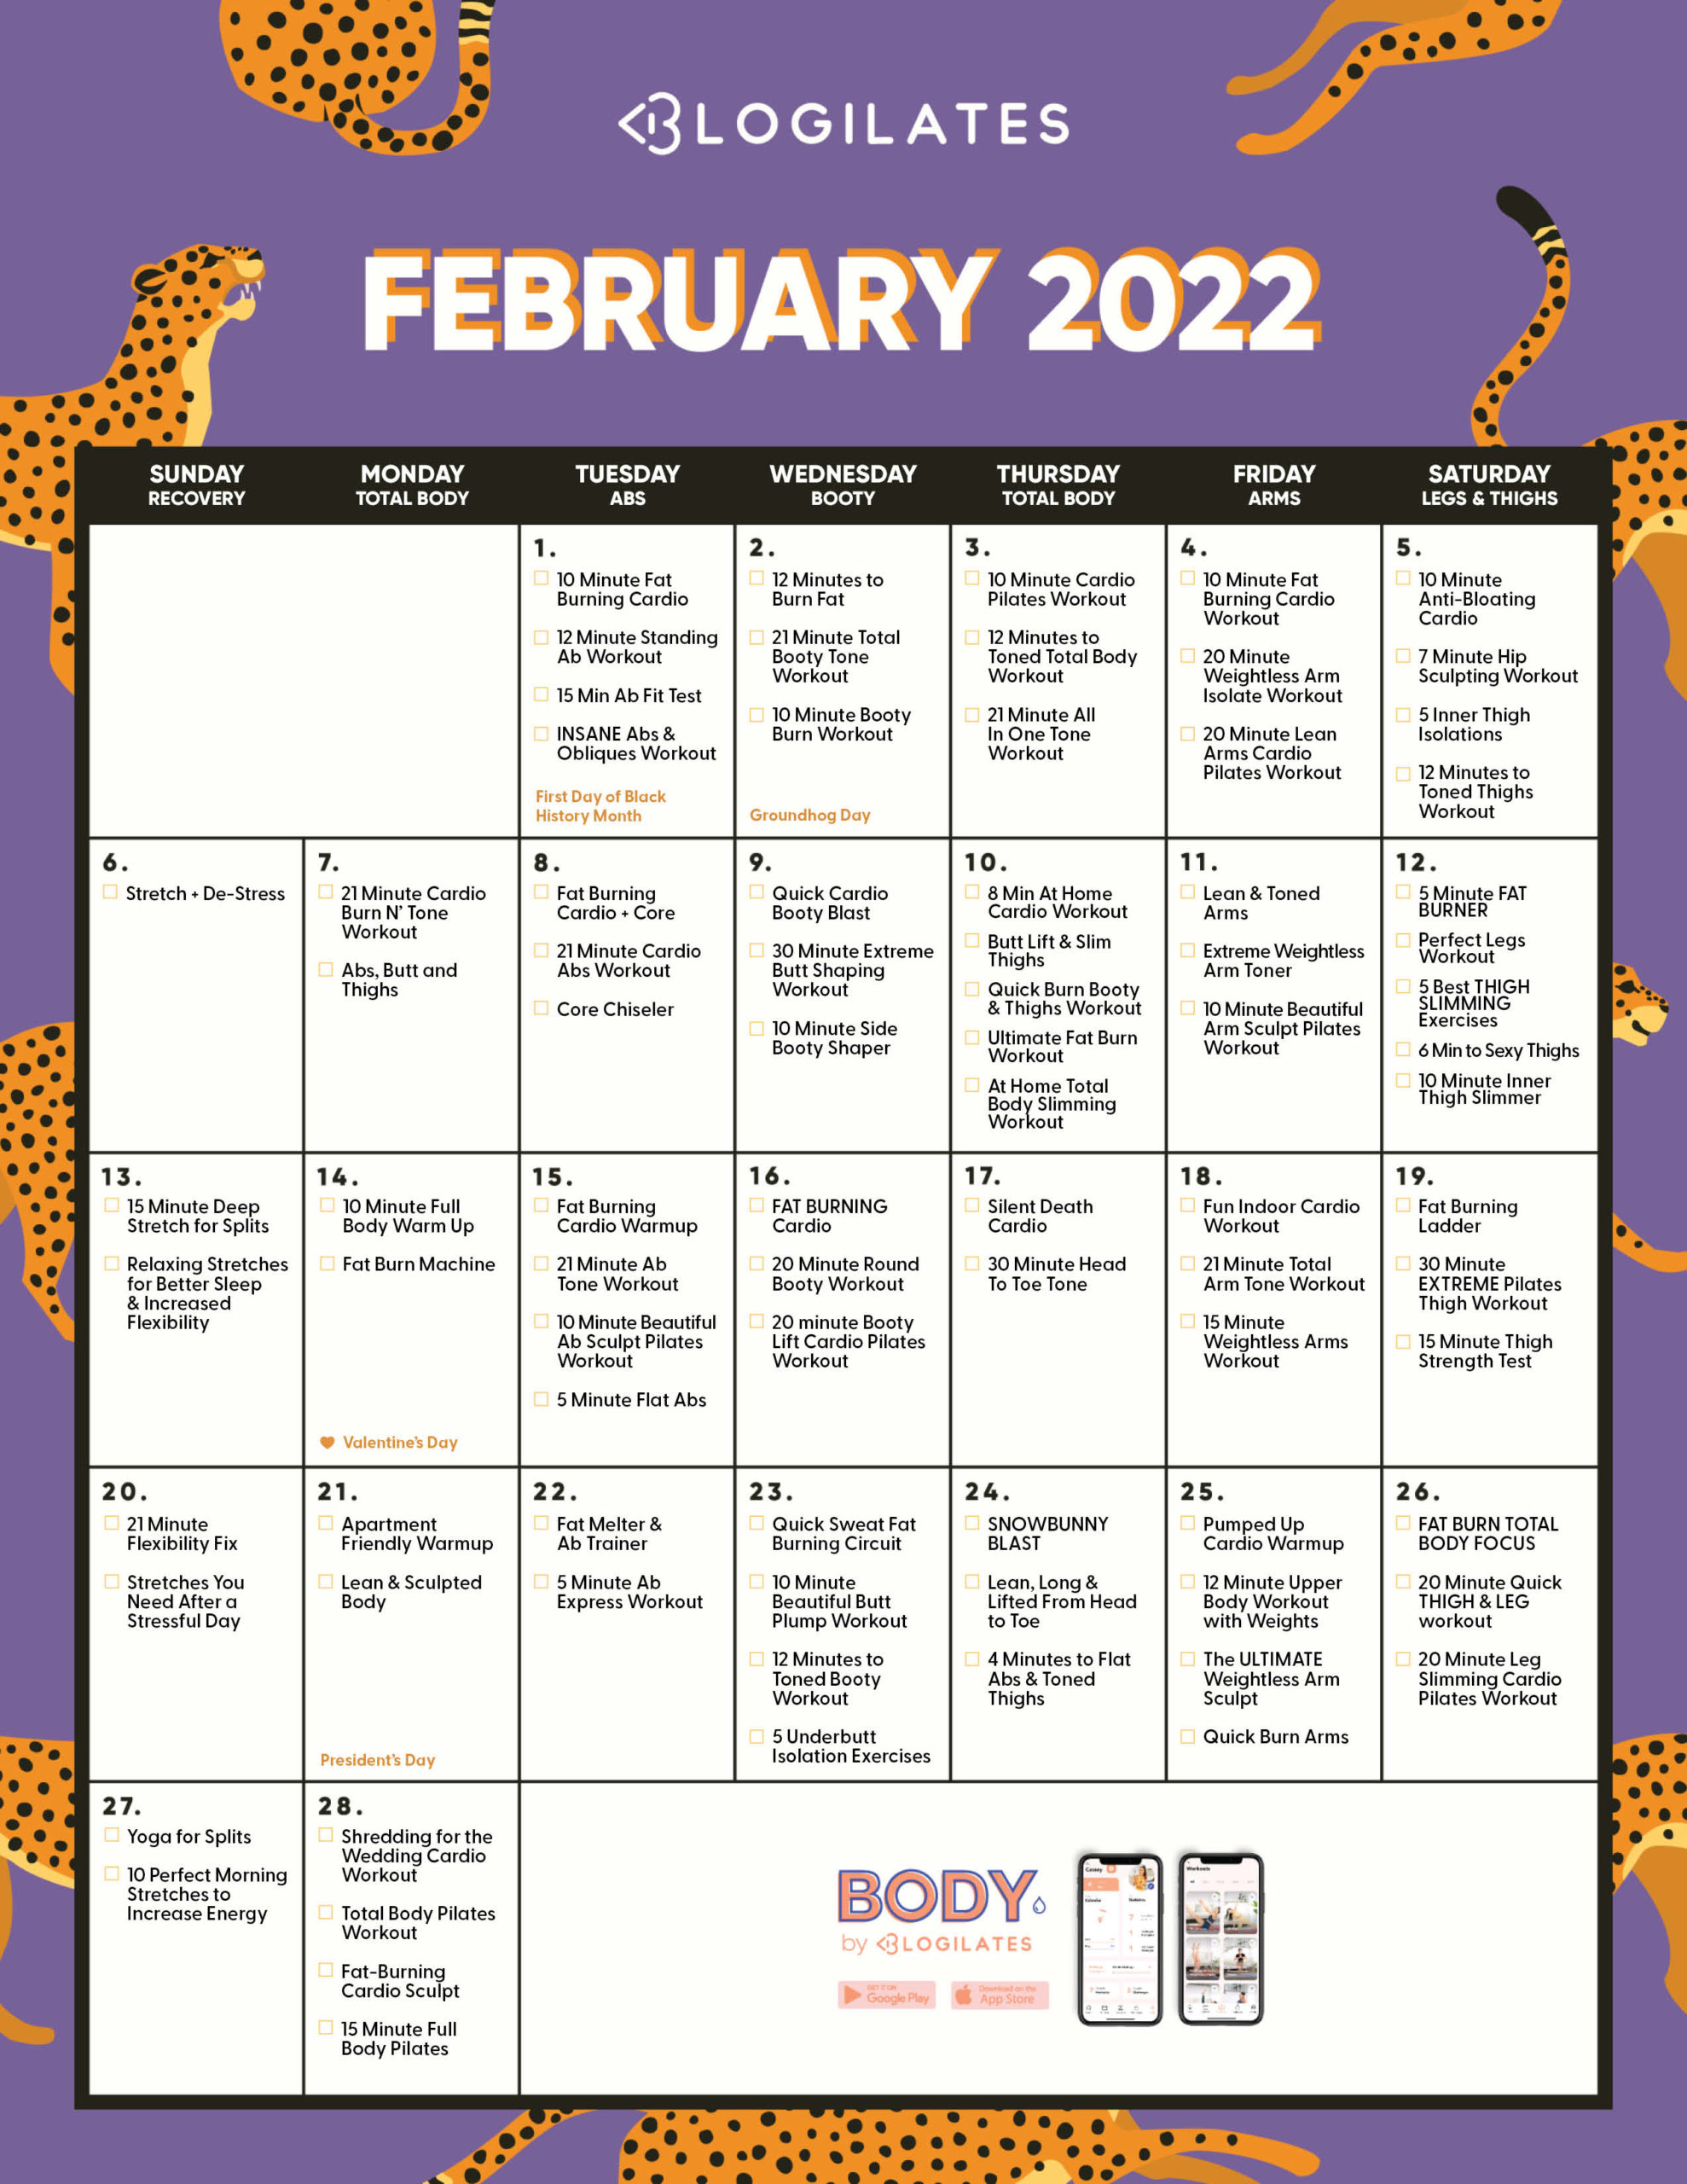 Febraury 2022 Calendar The Blogilates February 2022 Workout Calendar! - Blogilates